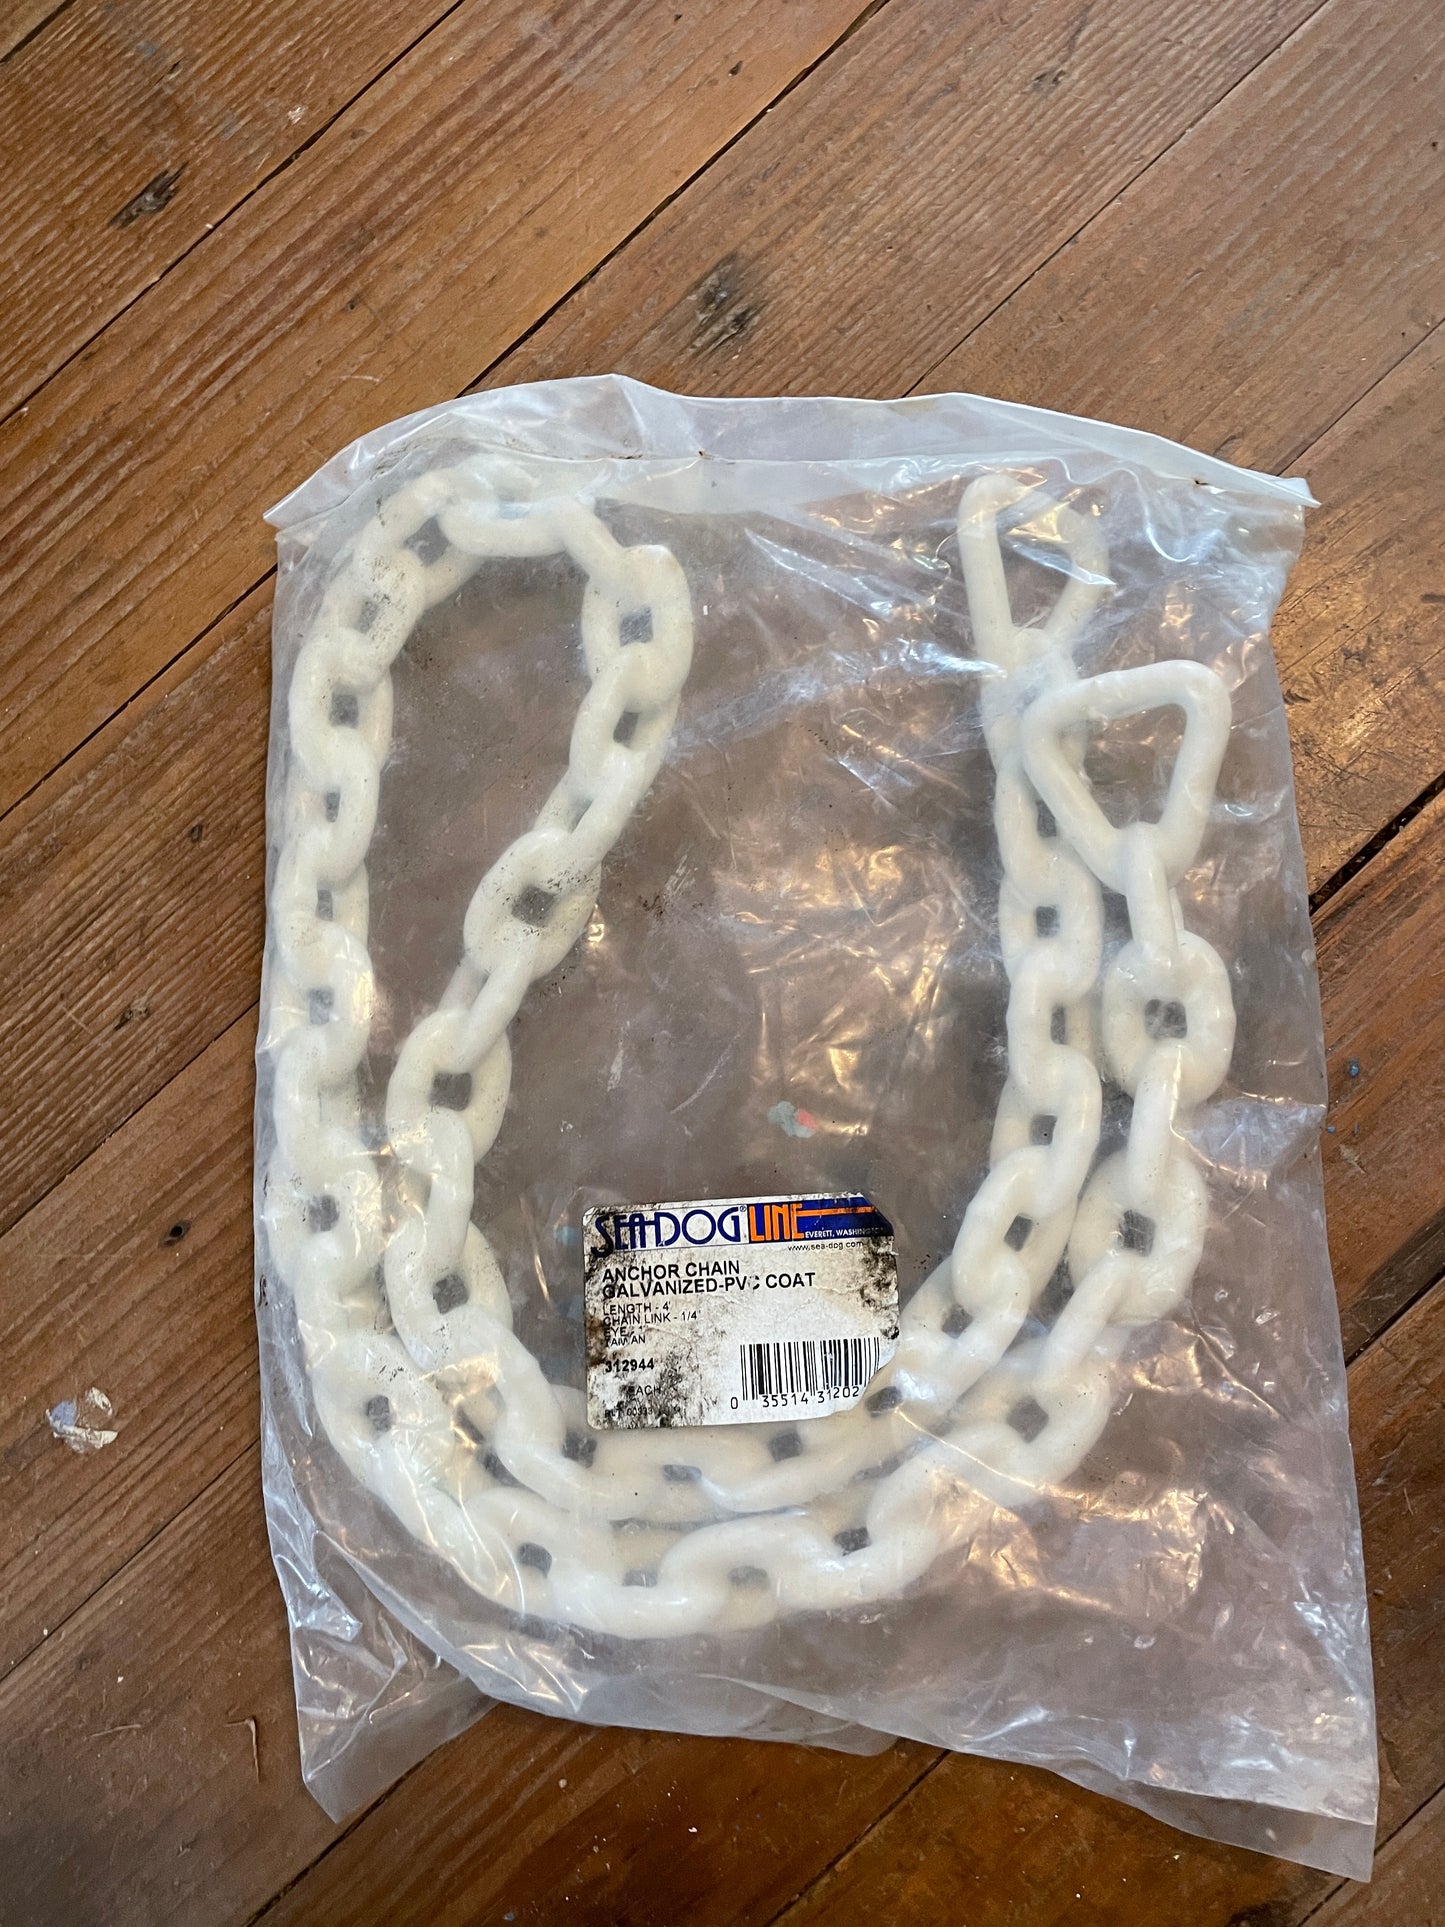 Seadog Line Galvanized PVC Coating 4’ Anchor Chain -NEW